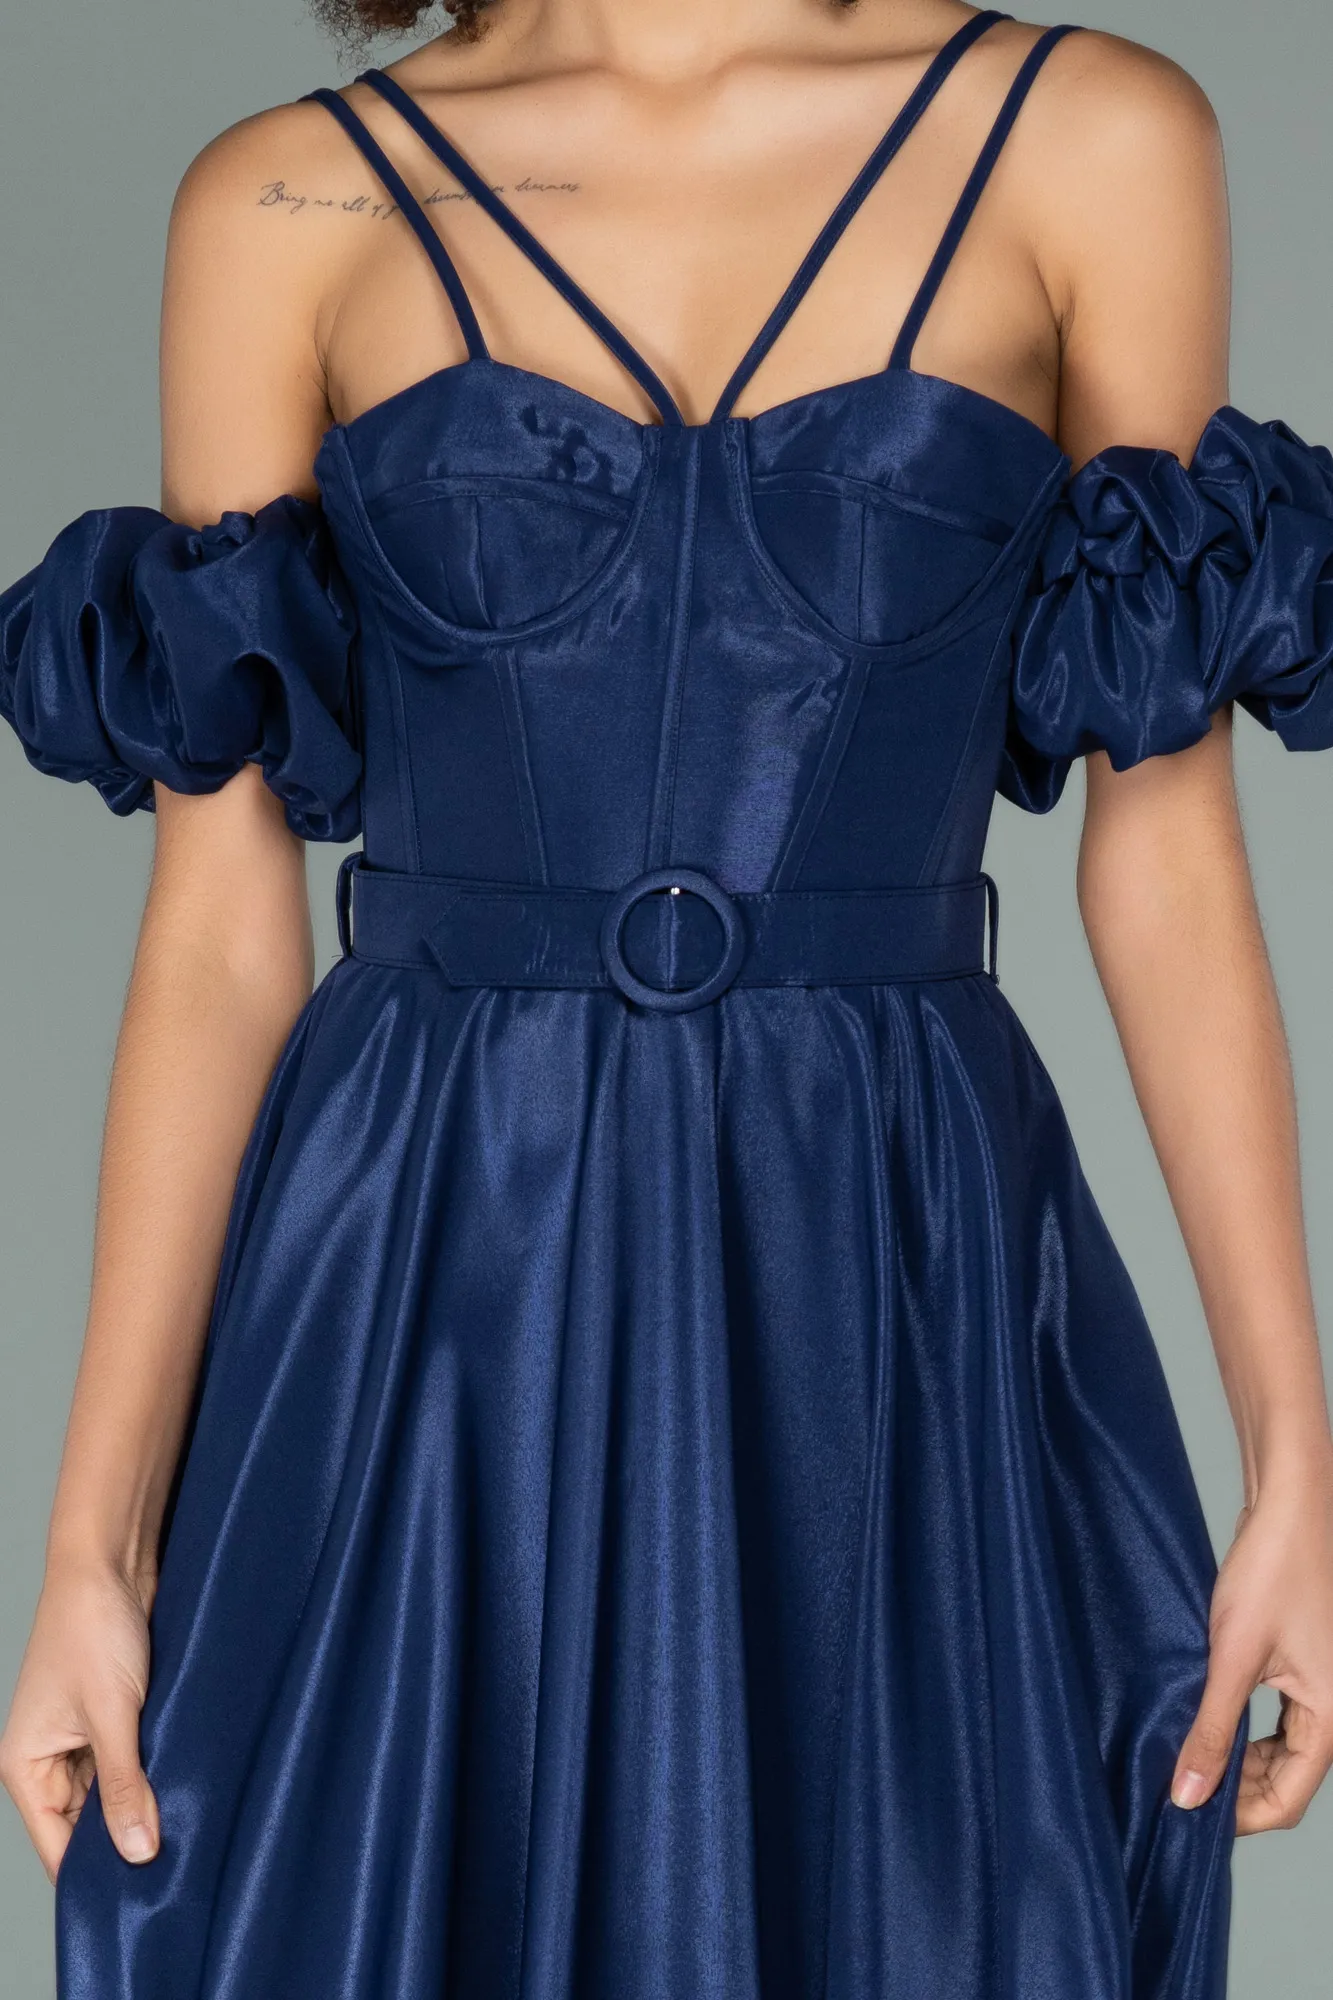 Navy Blue-Long Evening Dress ABU2145